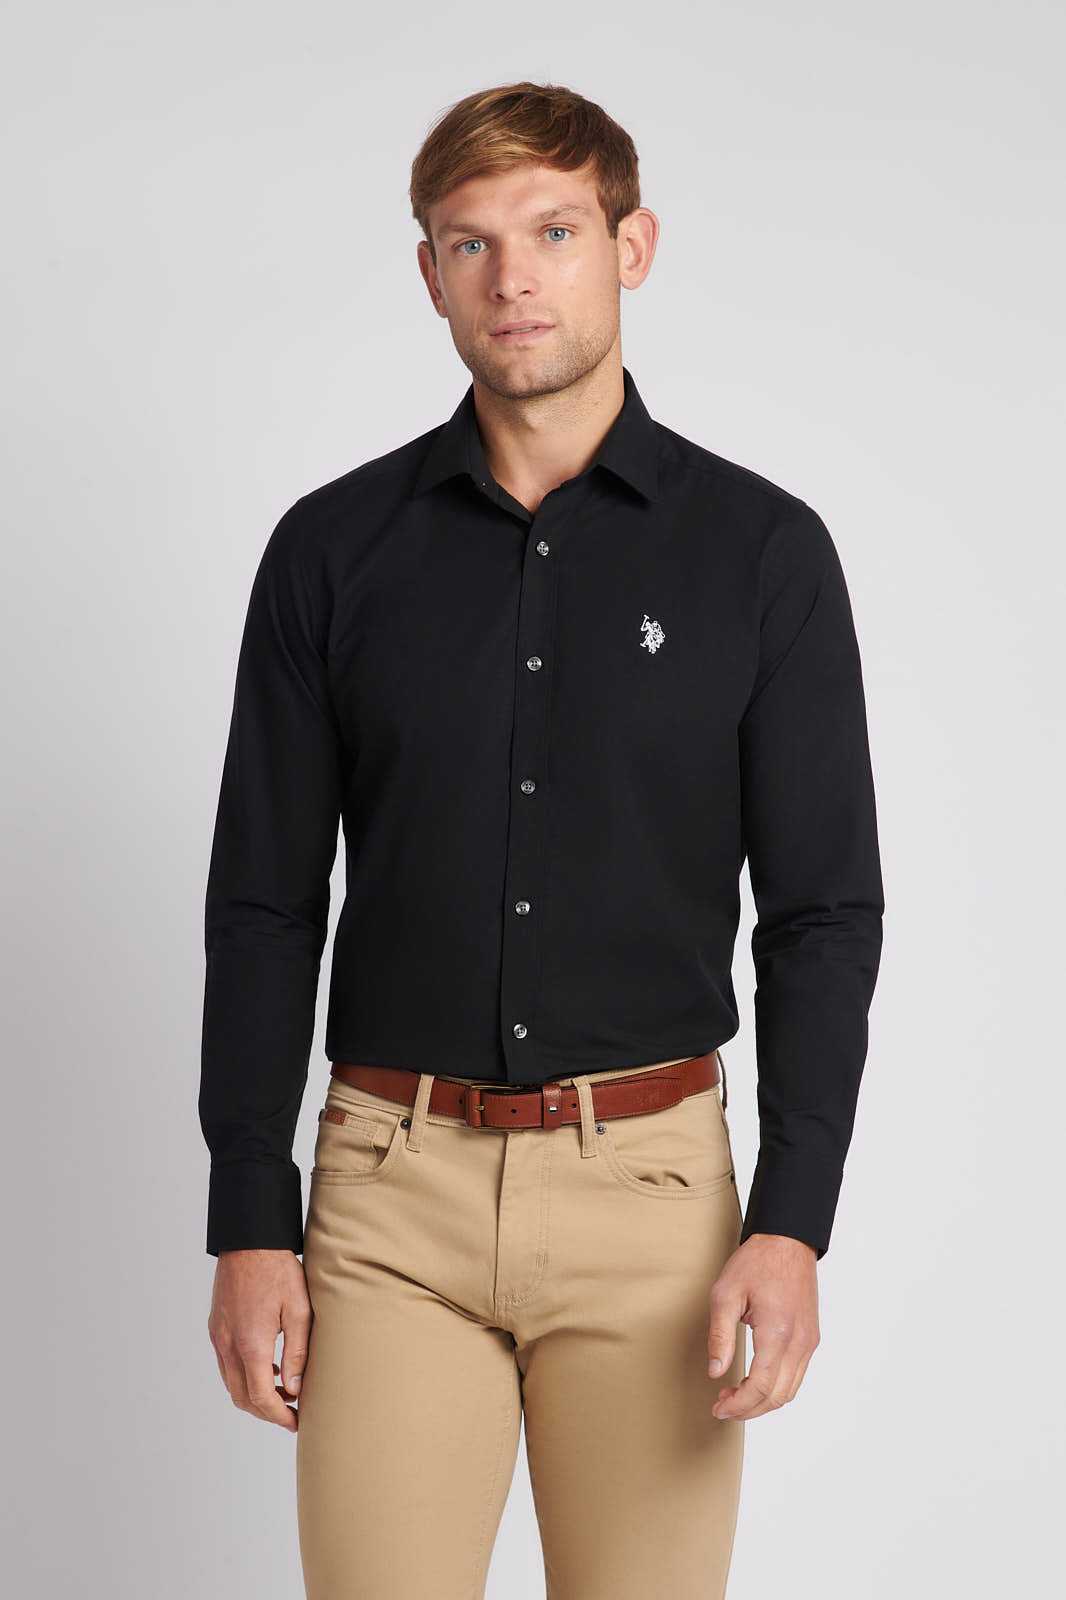 U.S. Polo Assn. Mens Long Sleeve Poplin Shirt in Black